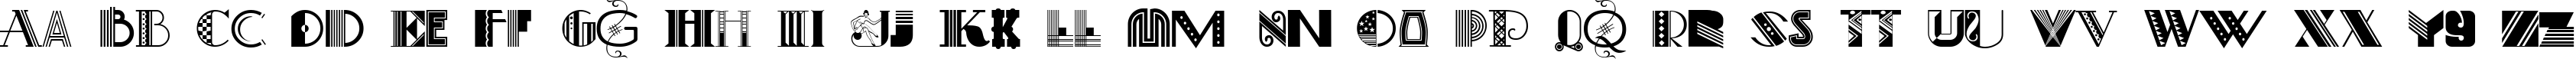 Пример написания английского алфавита шрифтом Art-Decoretta